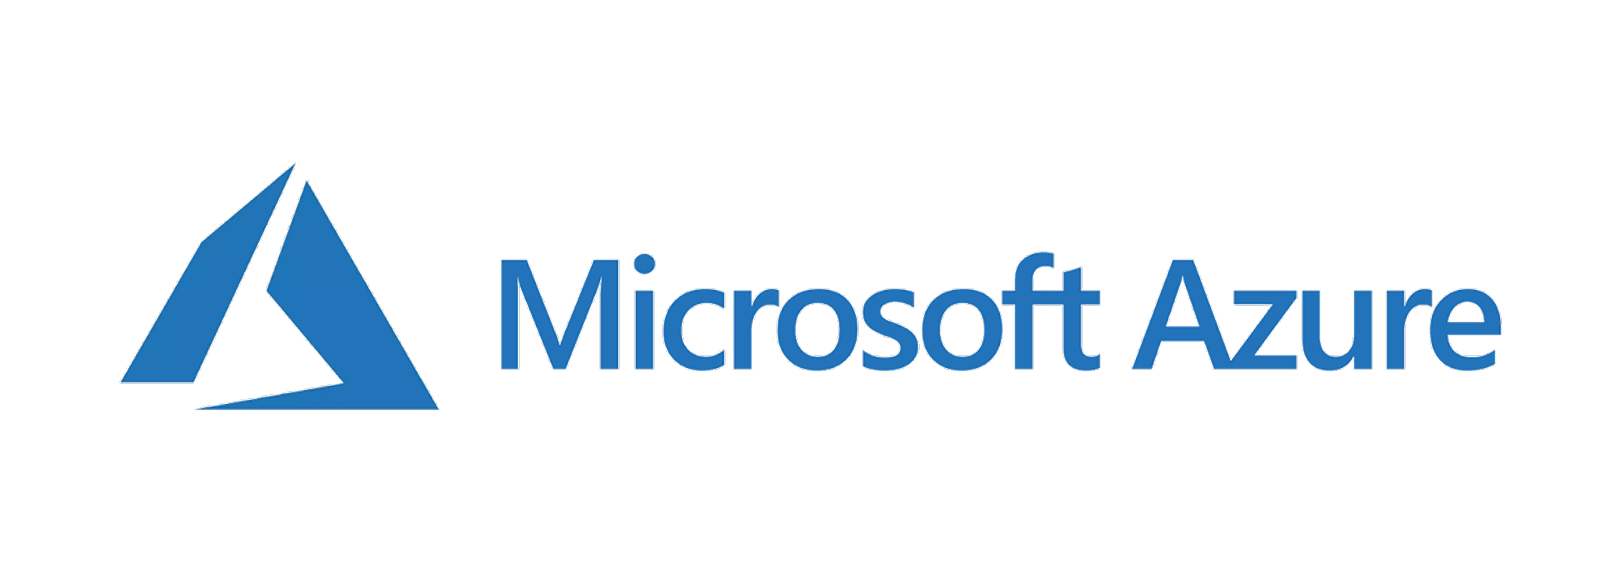 Astound Microsoft Azure partner logo